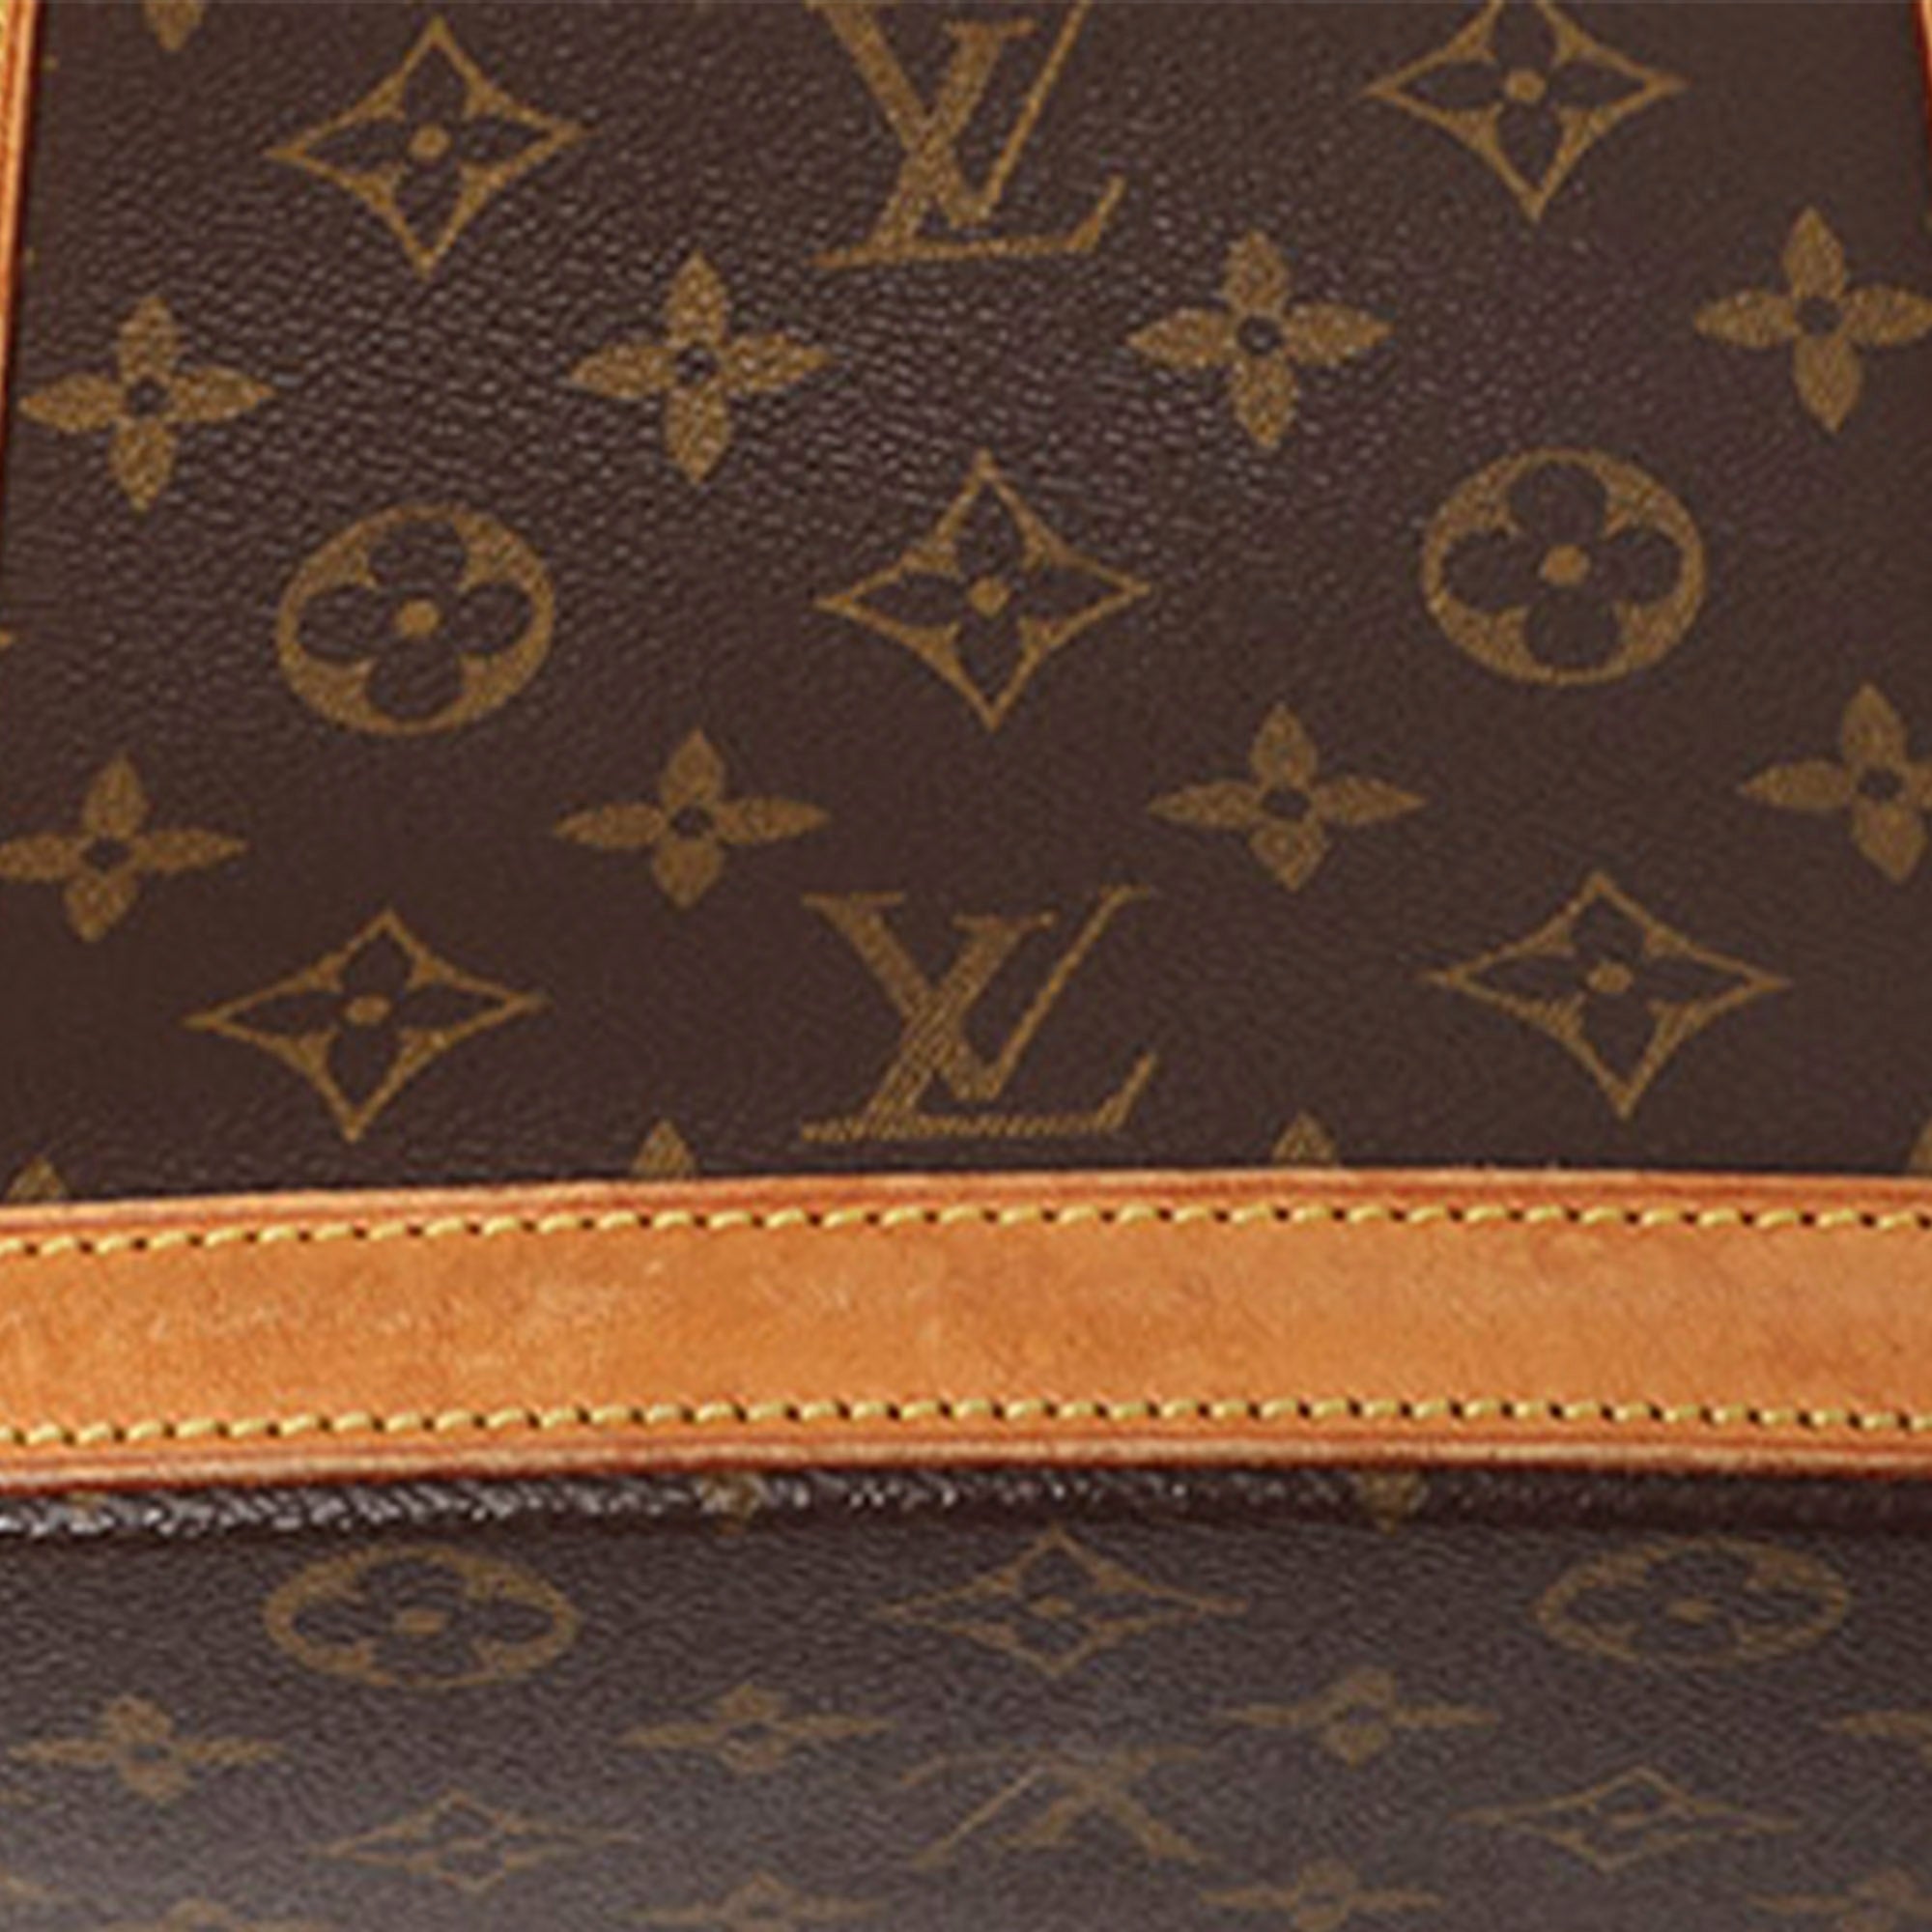 Louis Vuitton Babylone Shoulder Bag and Louis Vuitton Wallet